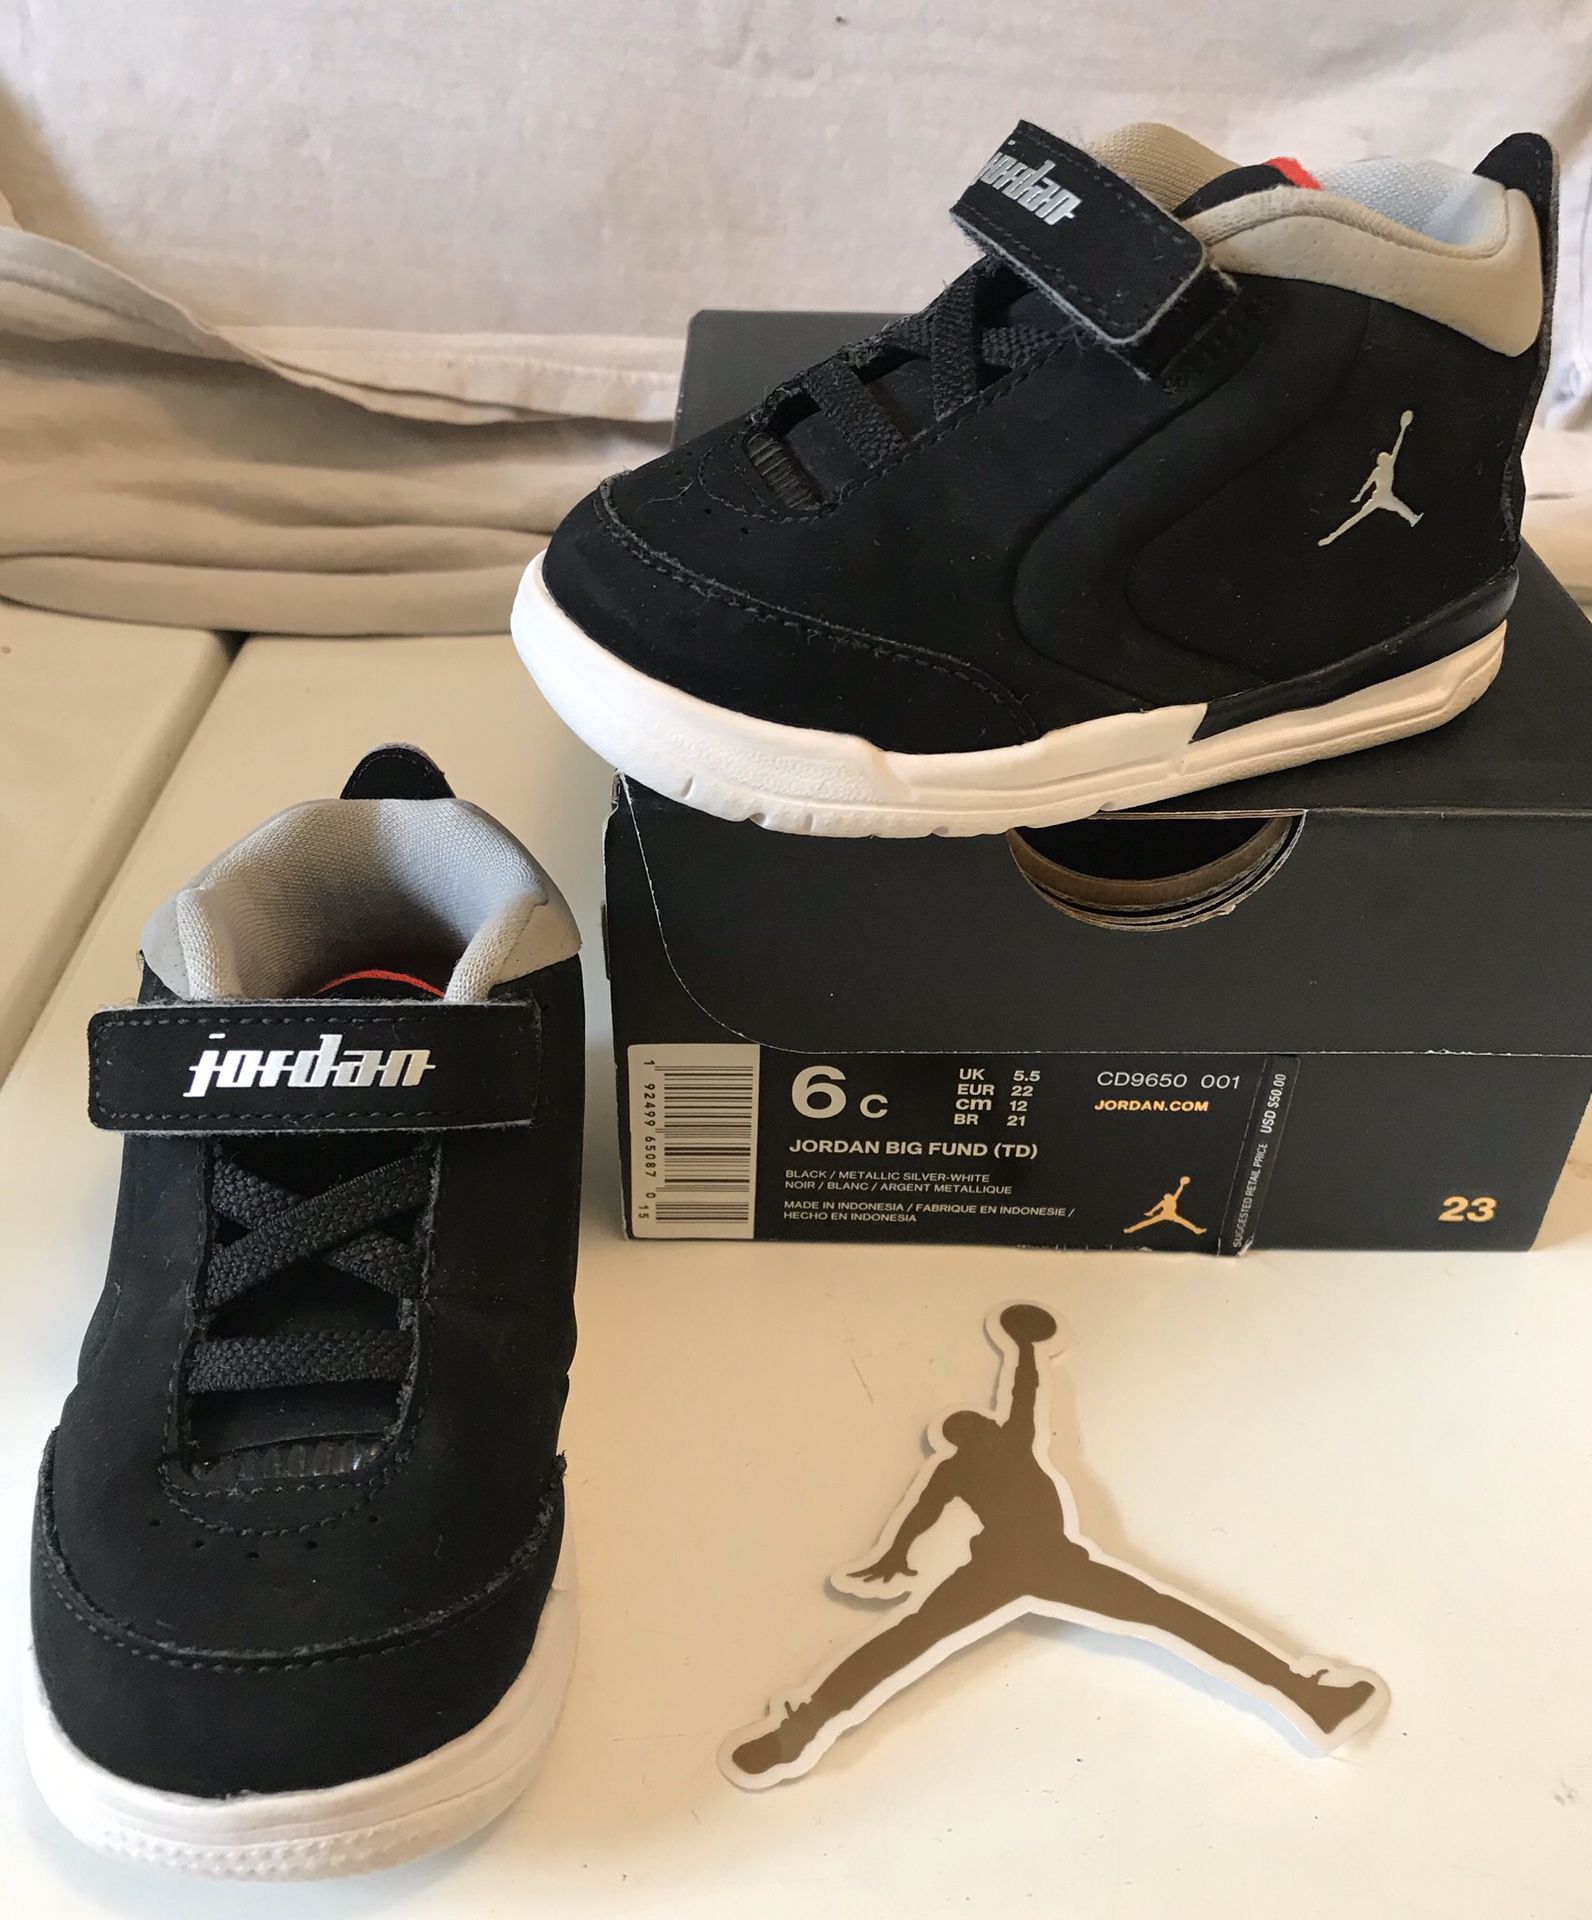 Jordan Shoes Toddler Boy’s Size 6C